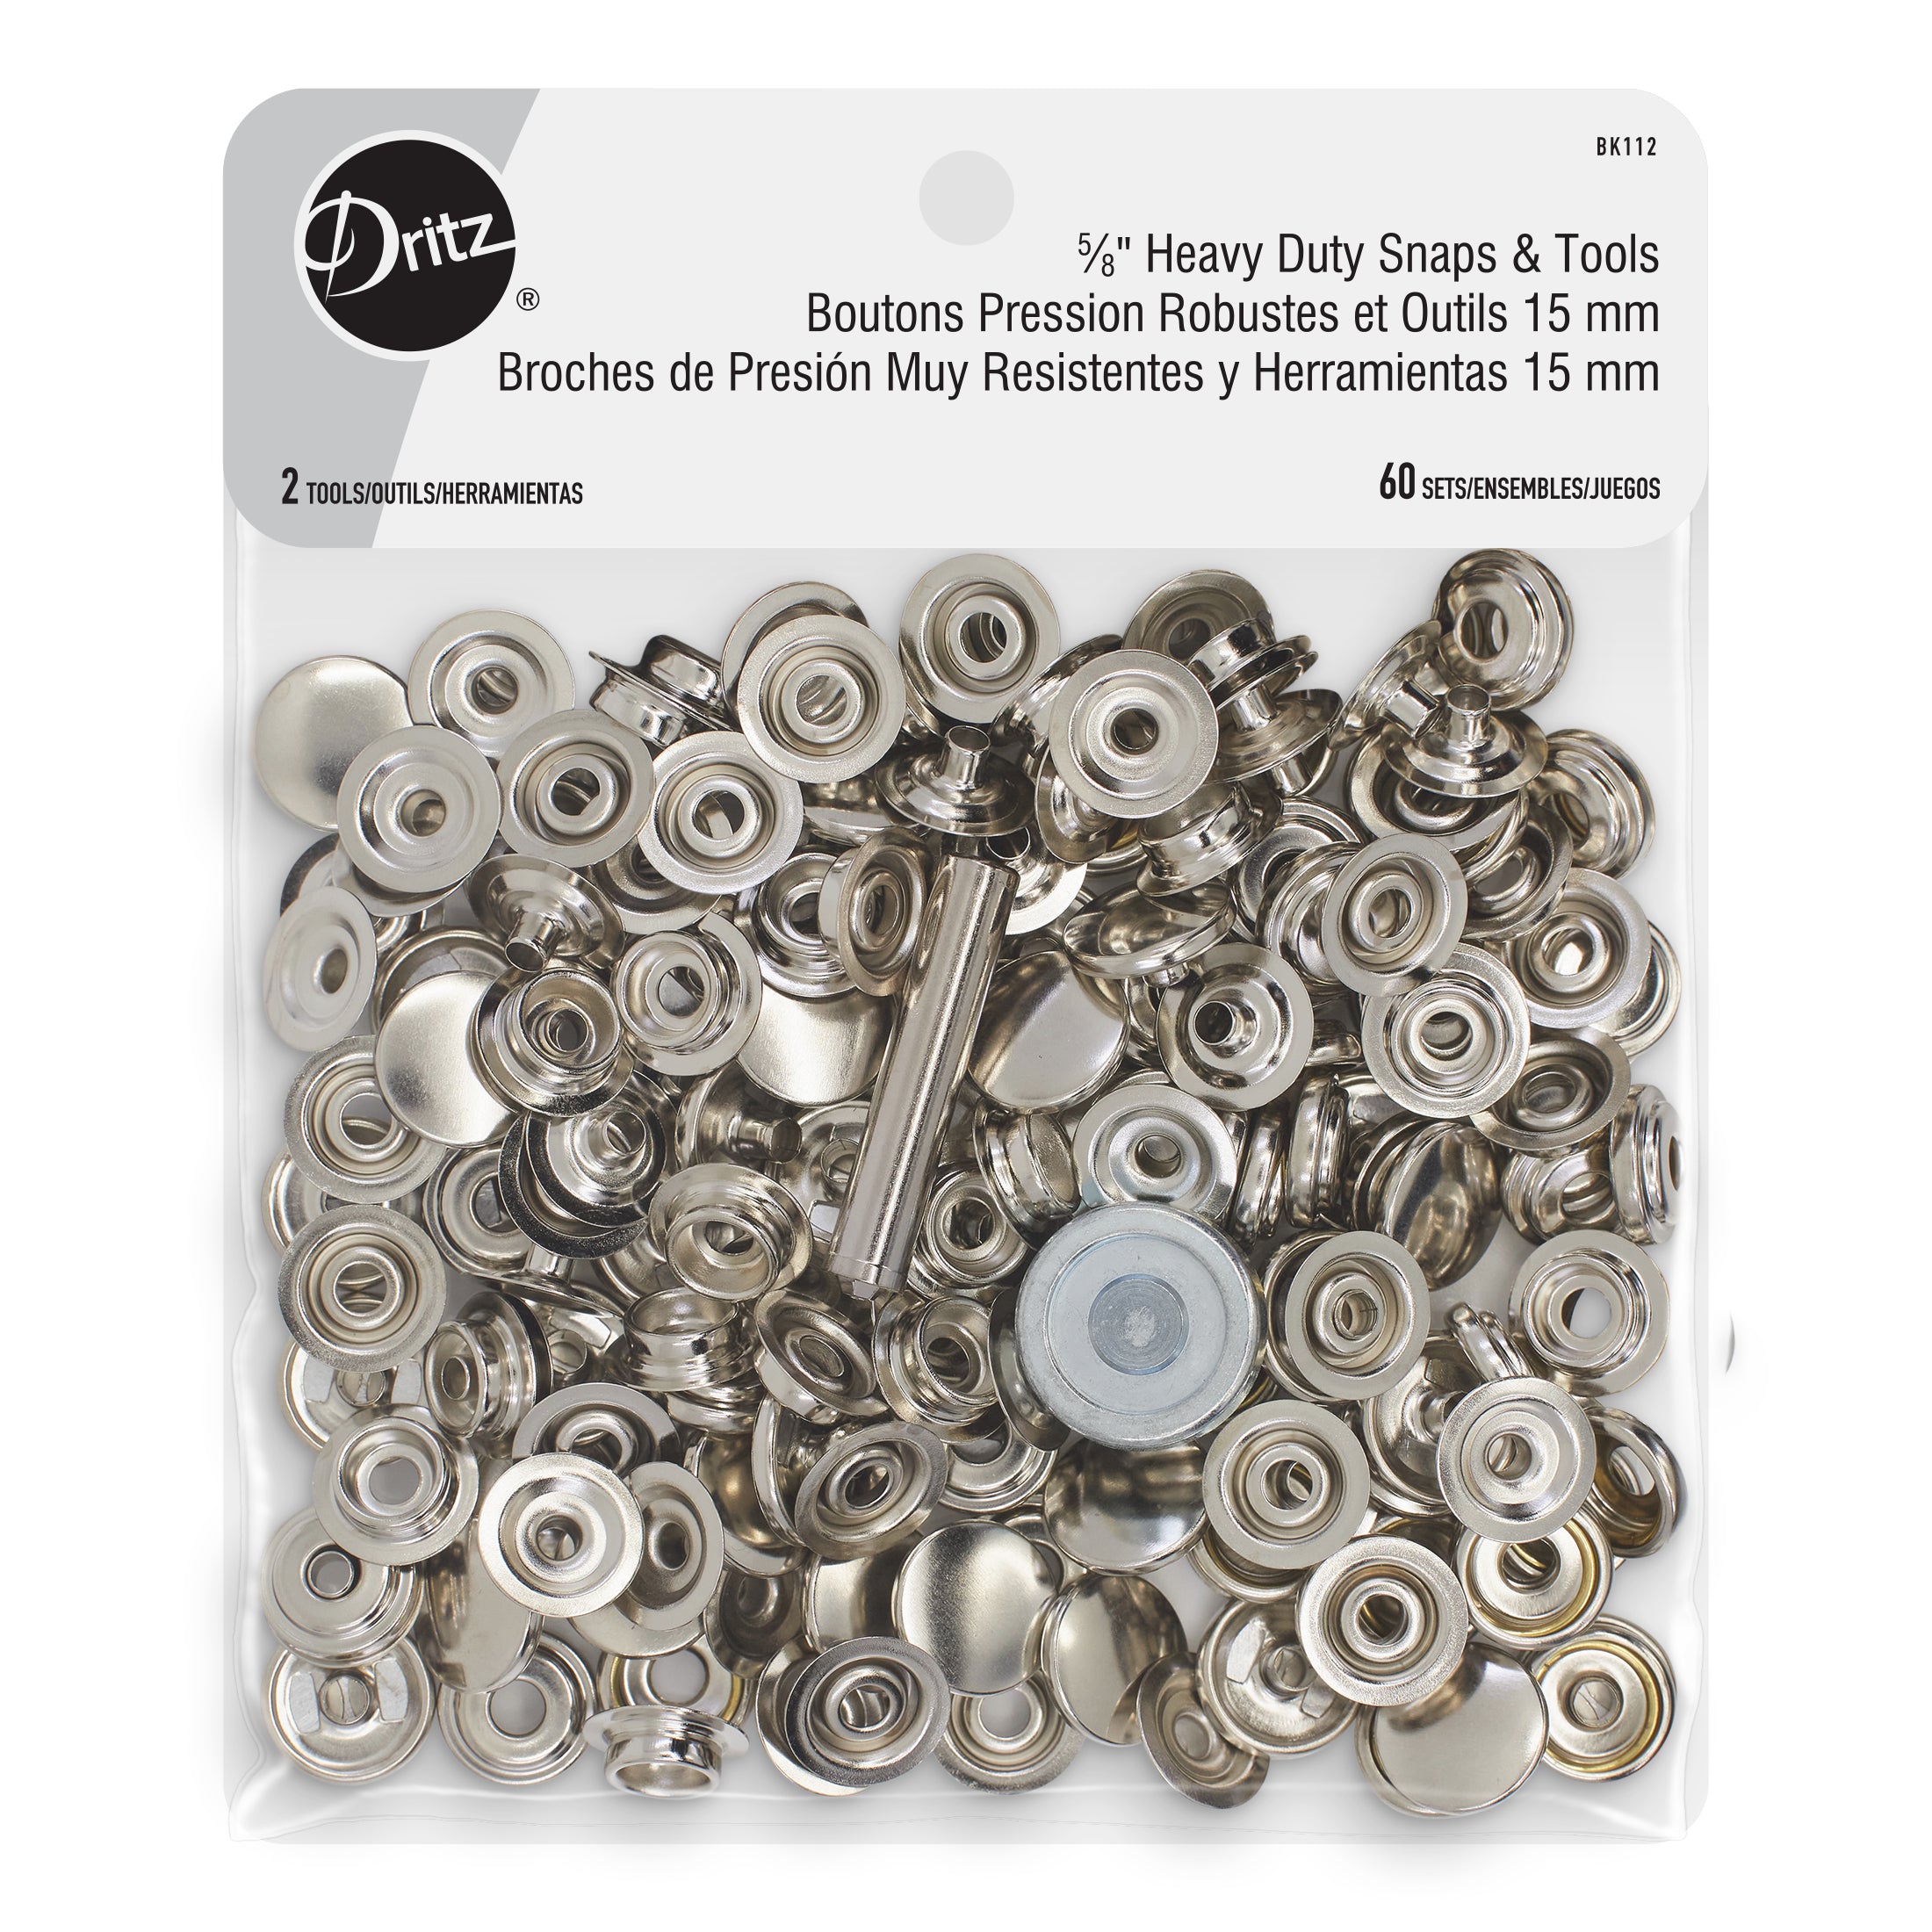 Dritz 5∕8 inch Heavy Duty Snaps & Tools, 60 Sets, Nickel